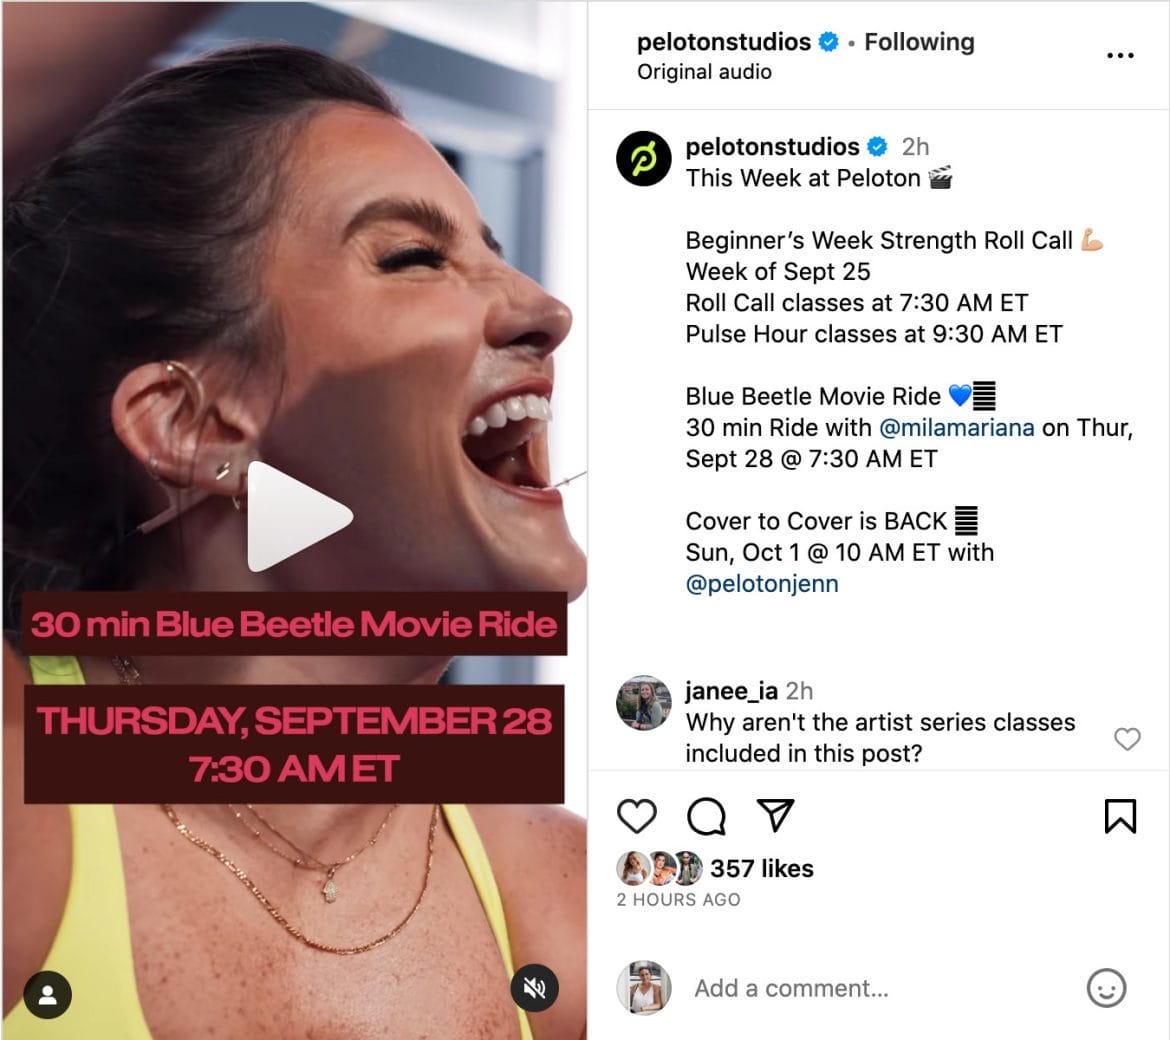 @PelotonStudios This Week at Peloton Instagram post announcing Blue Beetle movie classes.